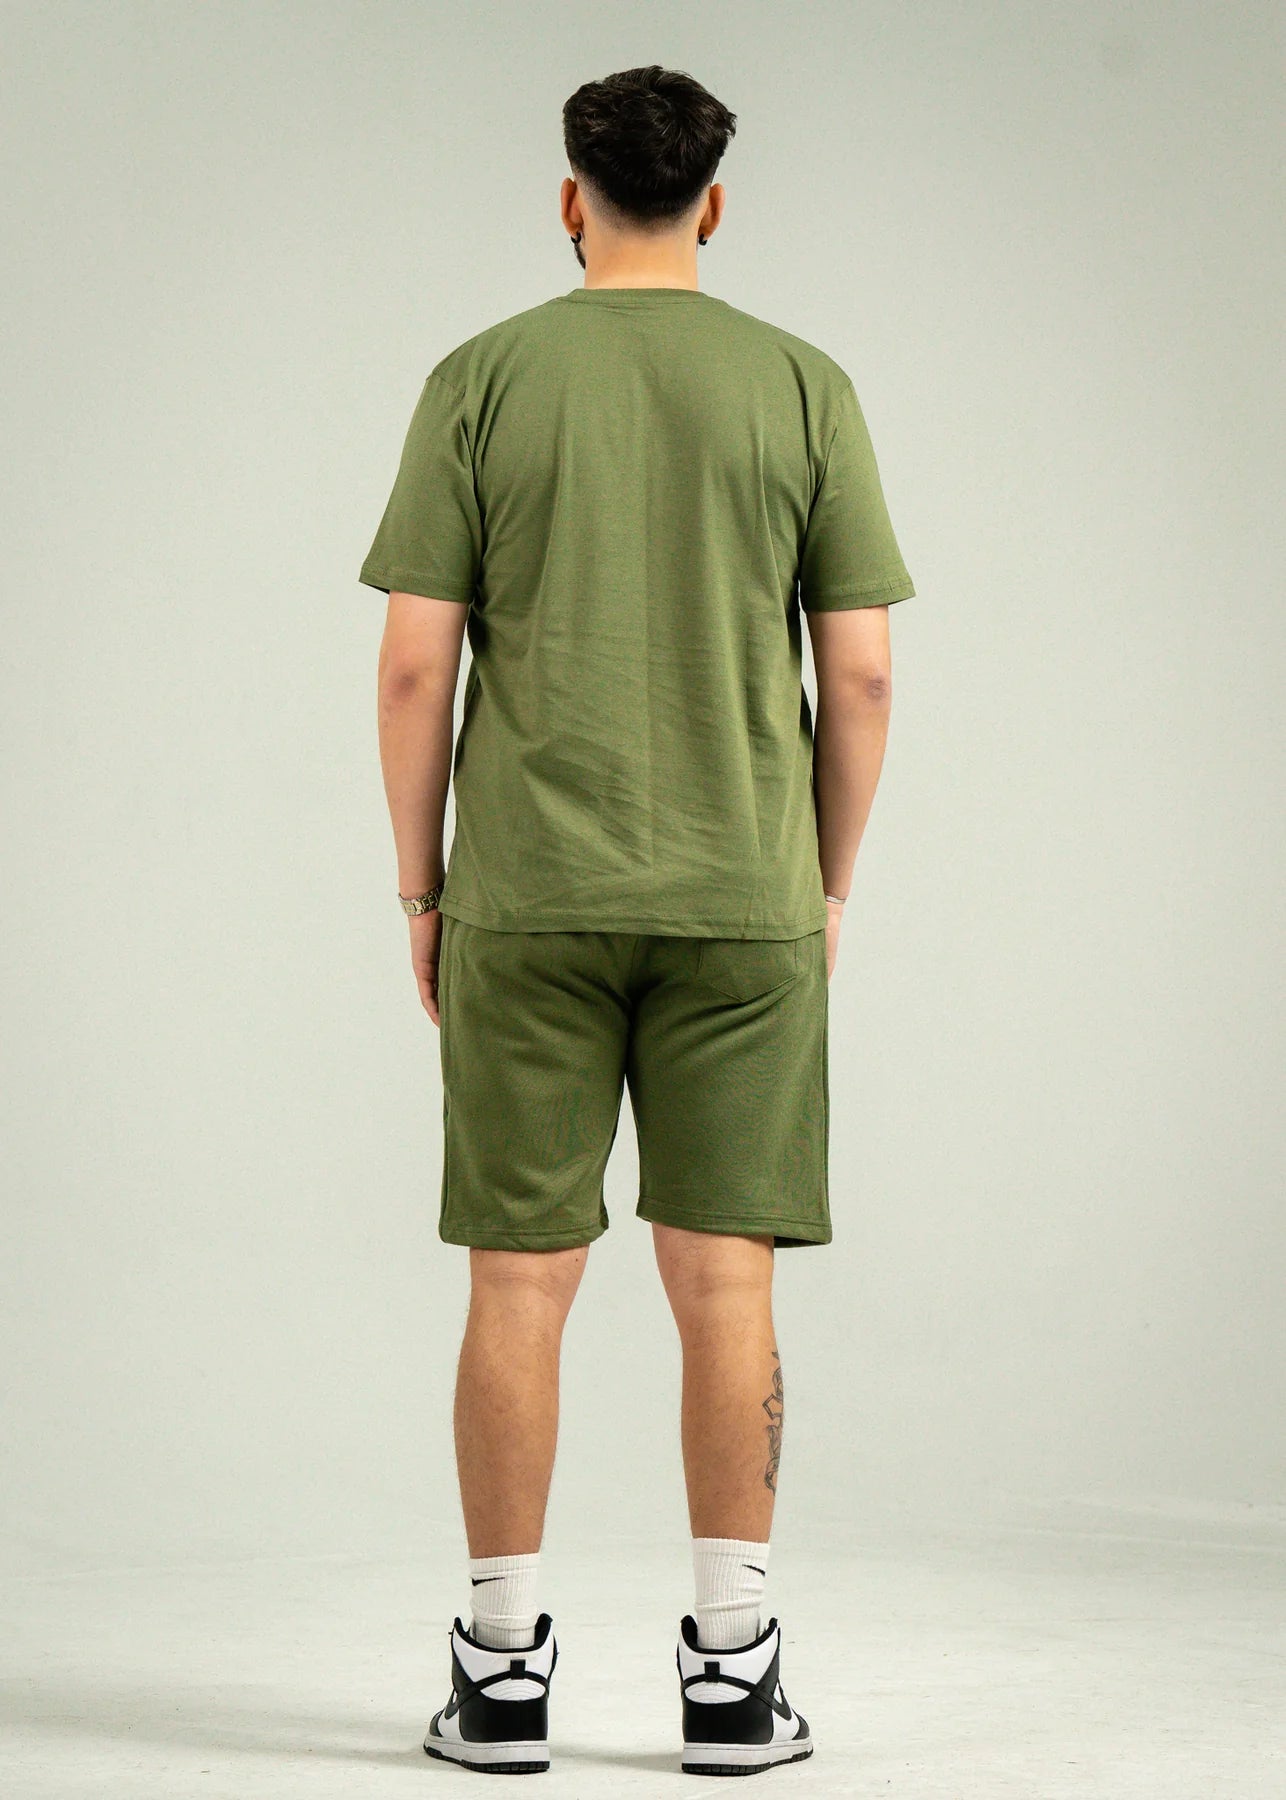 Olive Green T-Shirt and Short Set